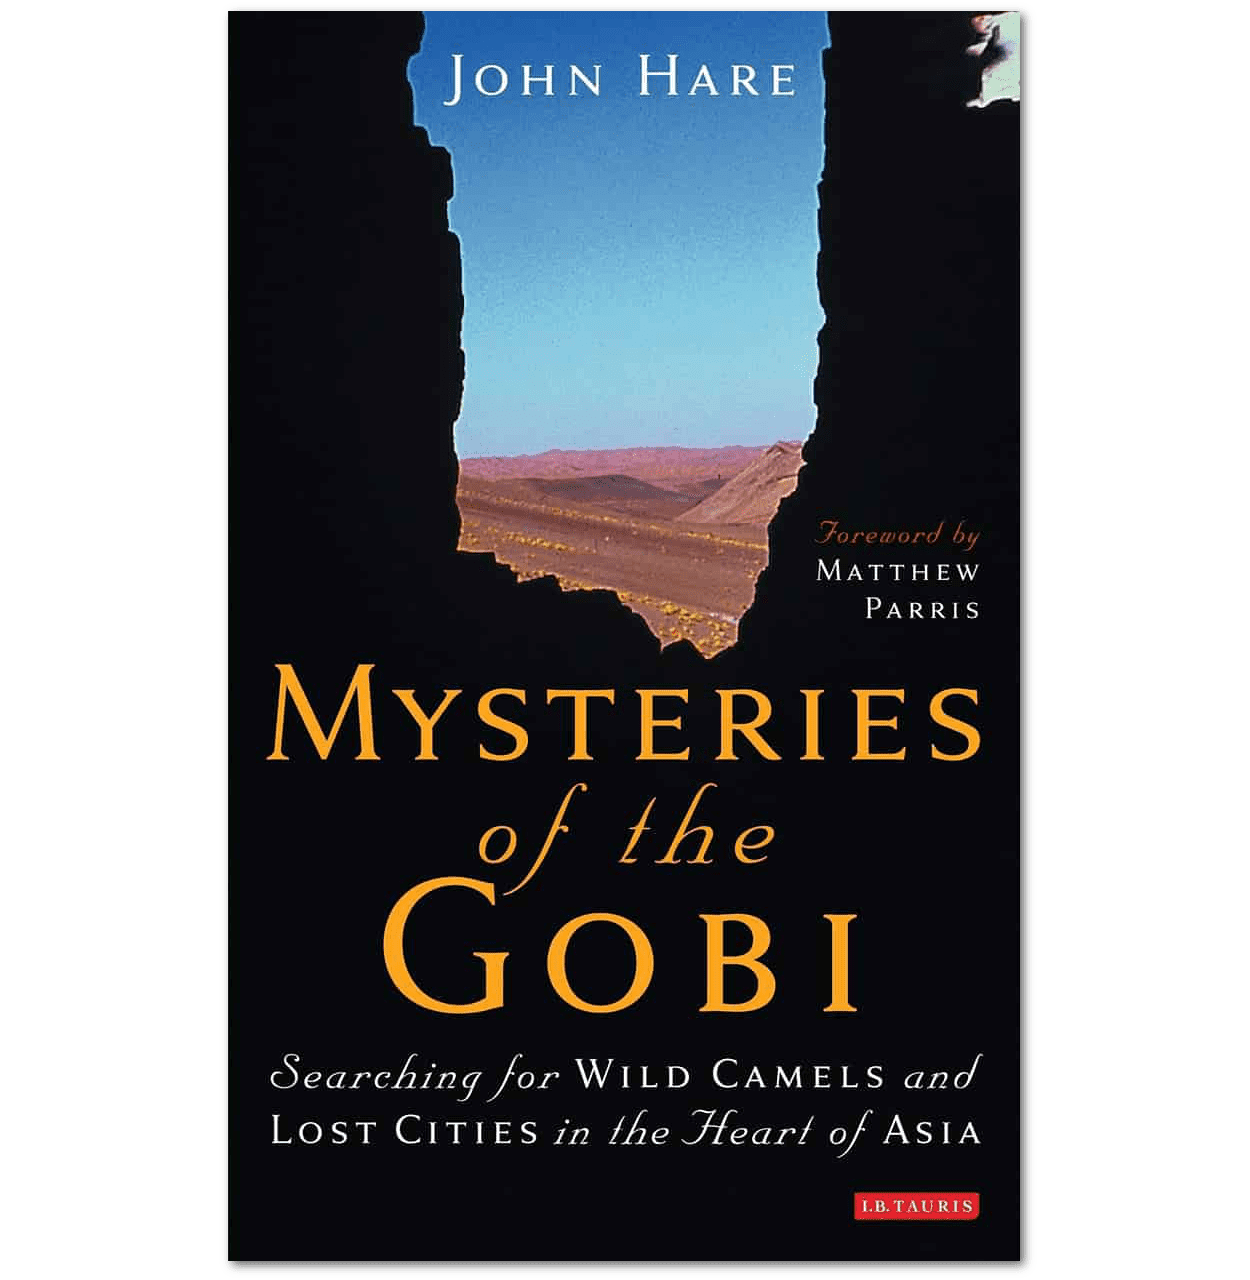 Mysteries of the Gobi